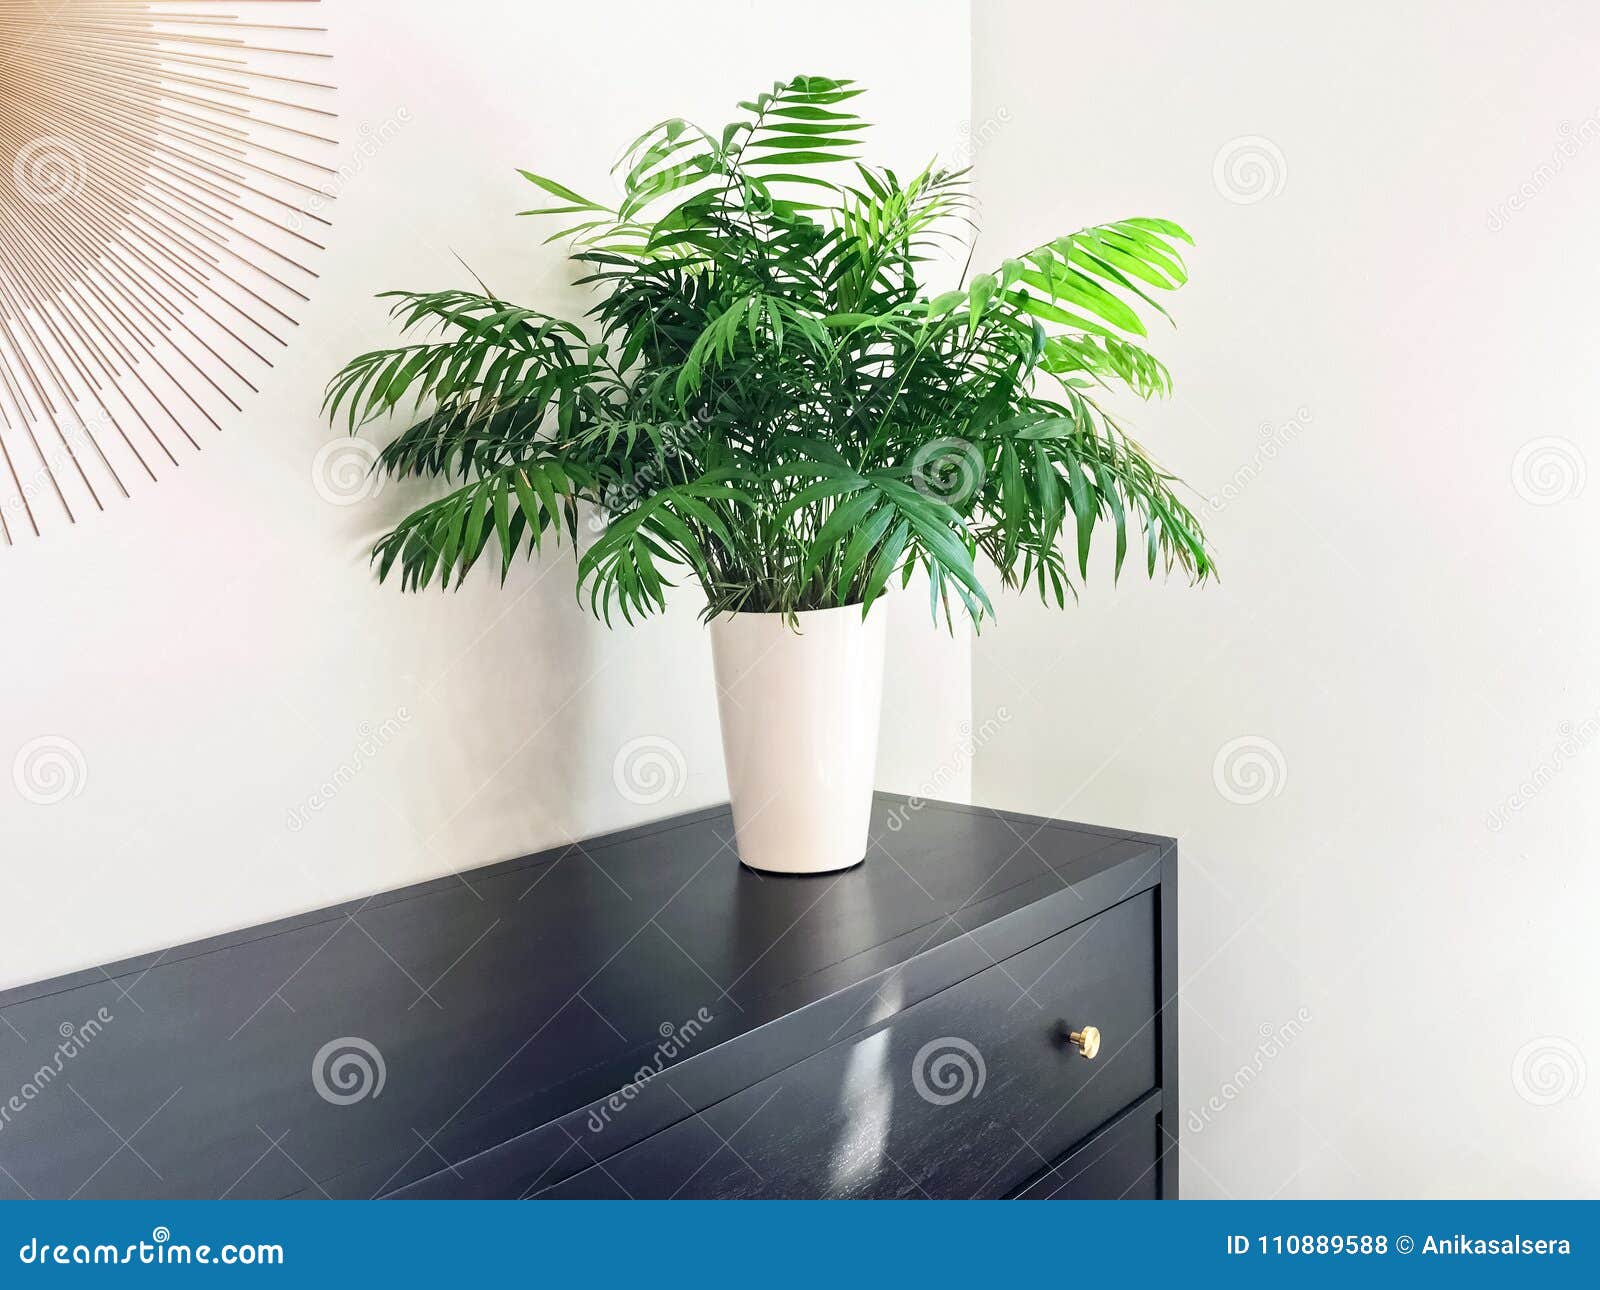 parlor palm plant decorating black wooden dresser